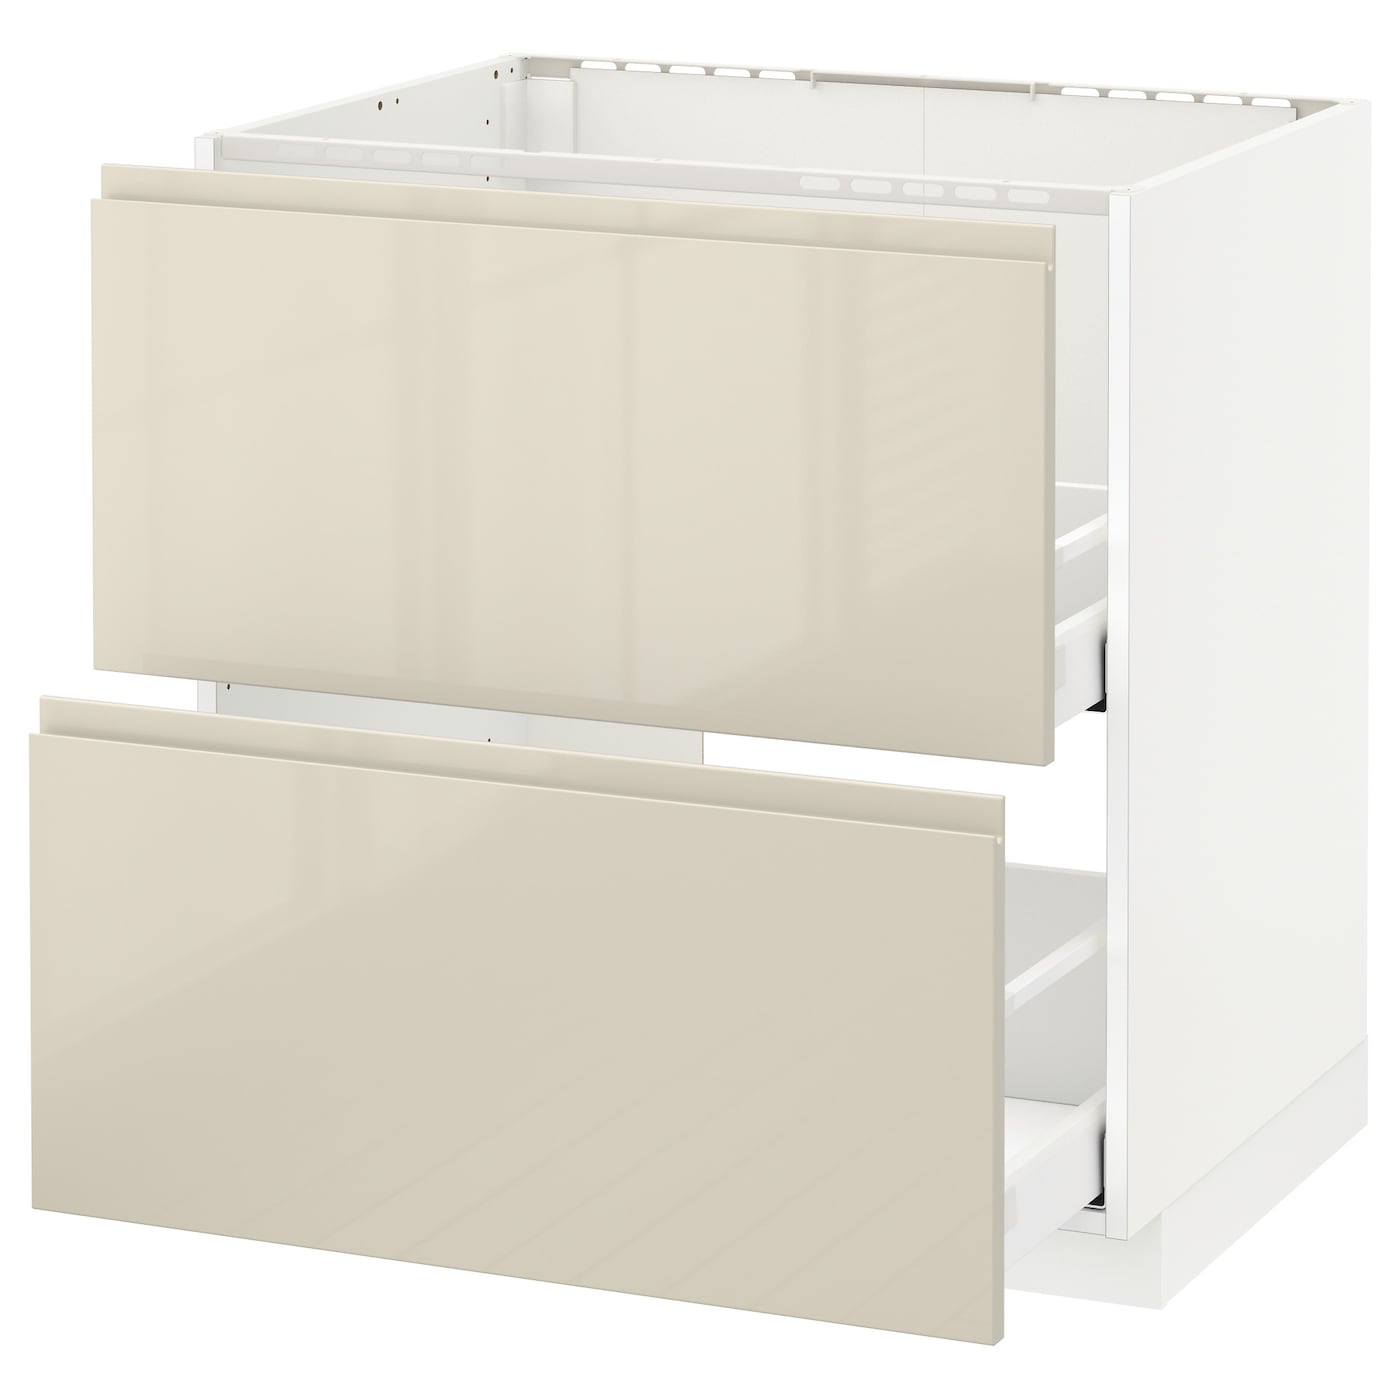 Напольный шкаф - METOD / MAXIMERA IKEA/ МЕТОД/ МАКСИМЕРА ИКЕА,  80х60 см, белый/бежевый